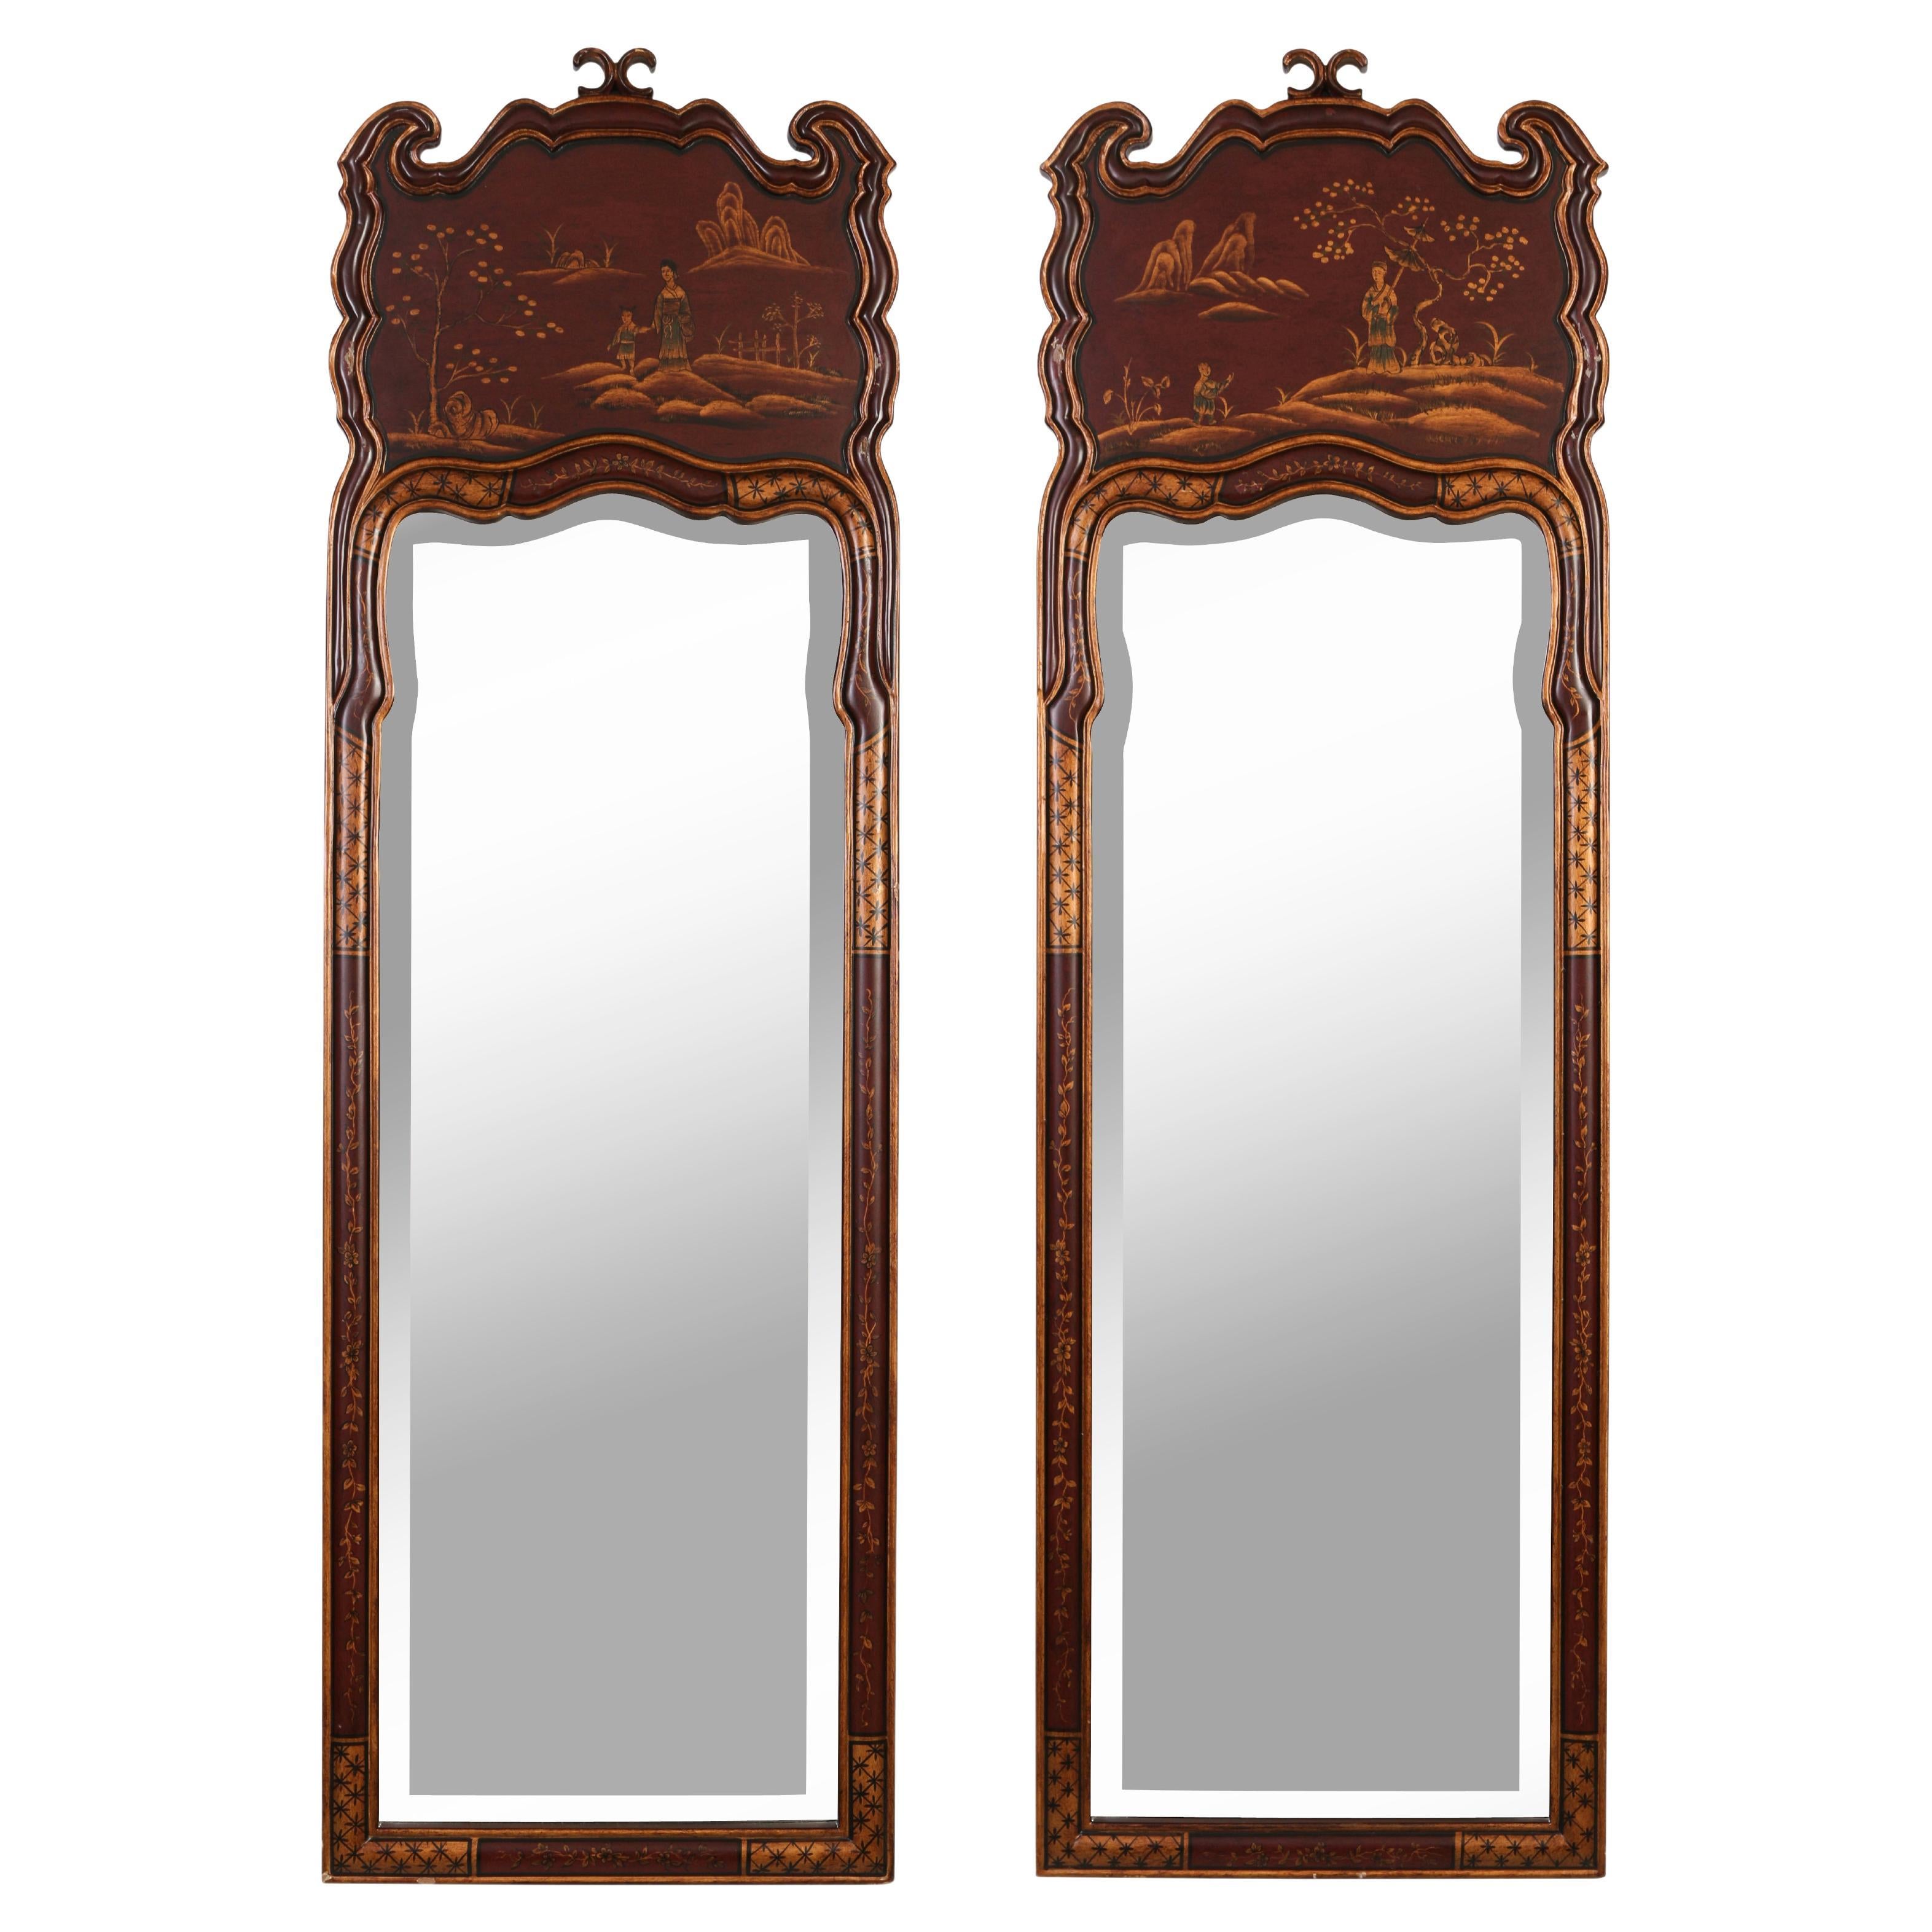 Pair of Chinoiserie Painted Narrow Mirrors